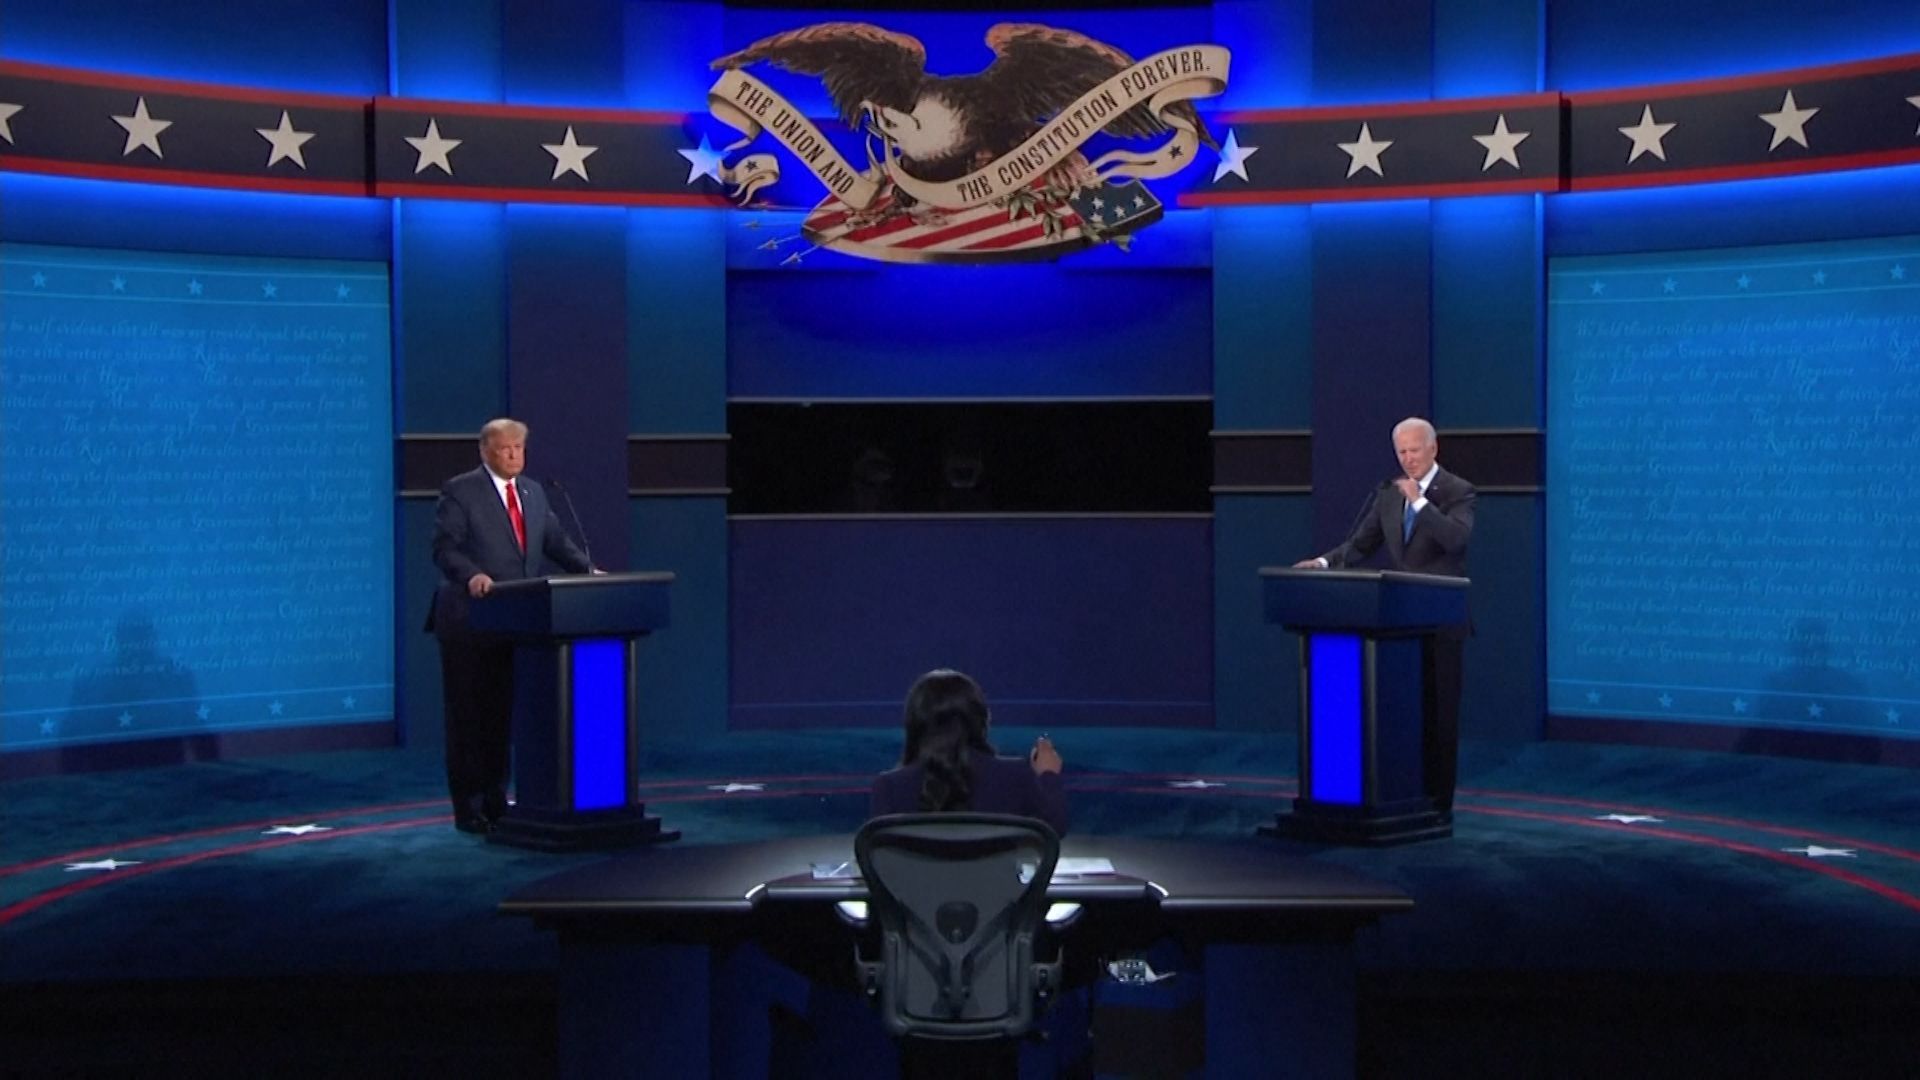 Poslední debata Donalda Trumpa s Joe Bidenem před prezidentskými volbami.